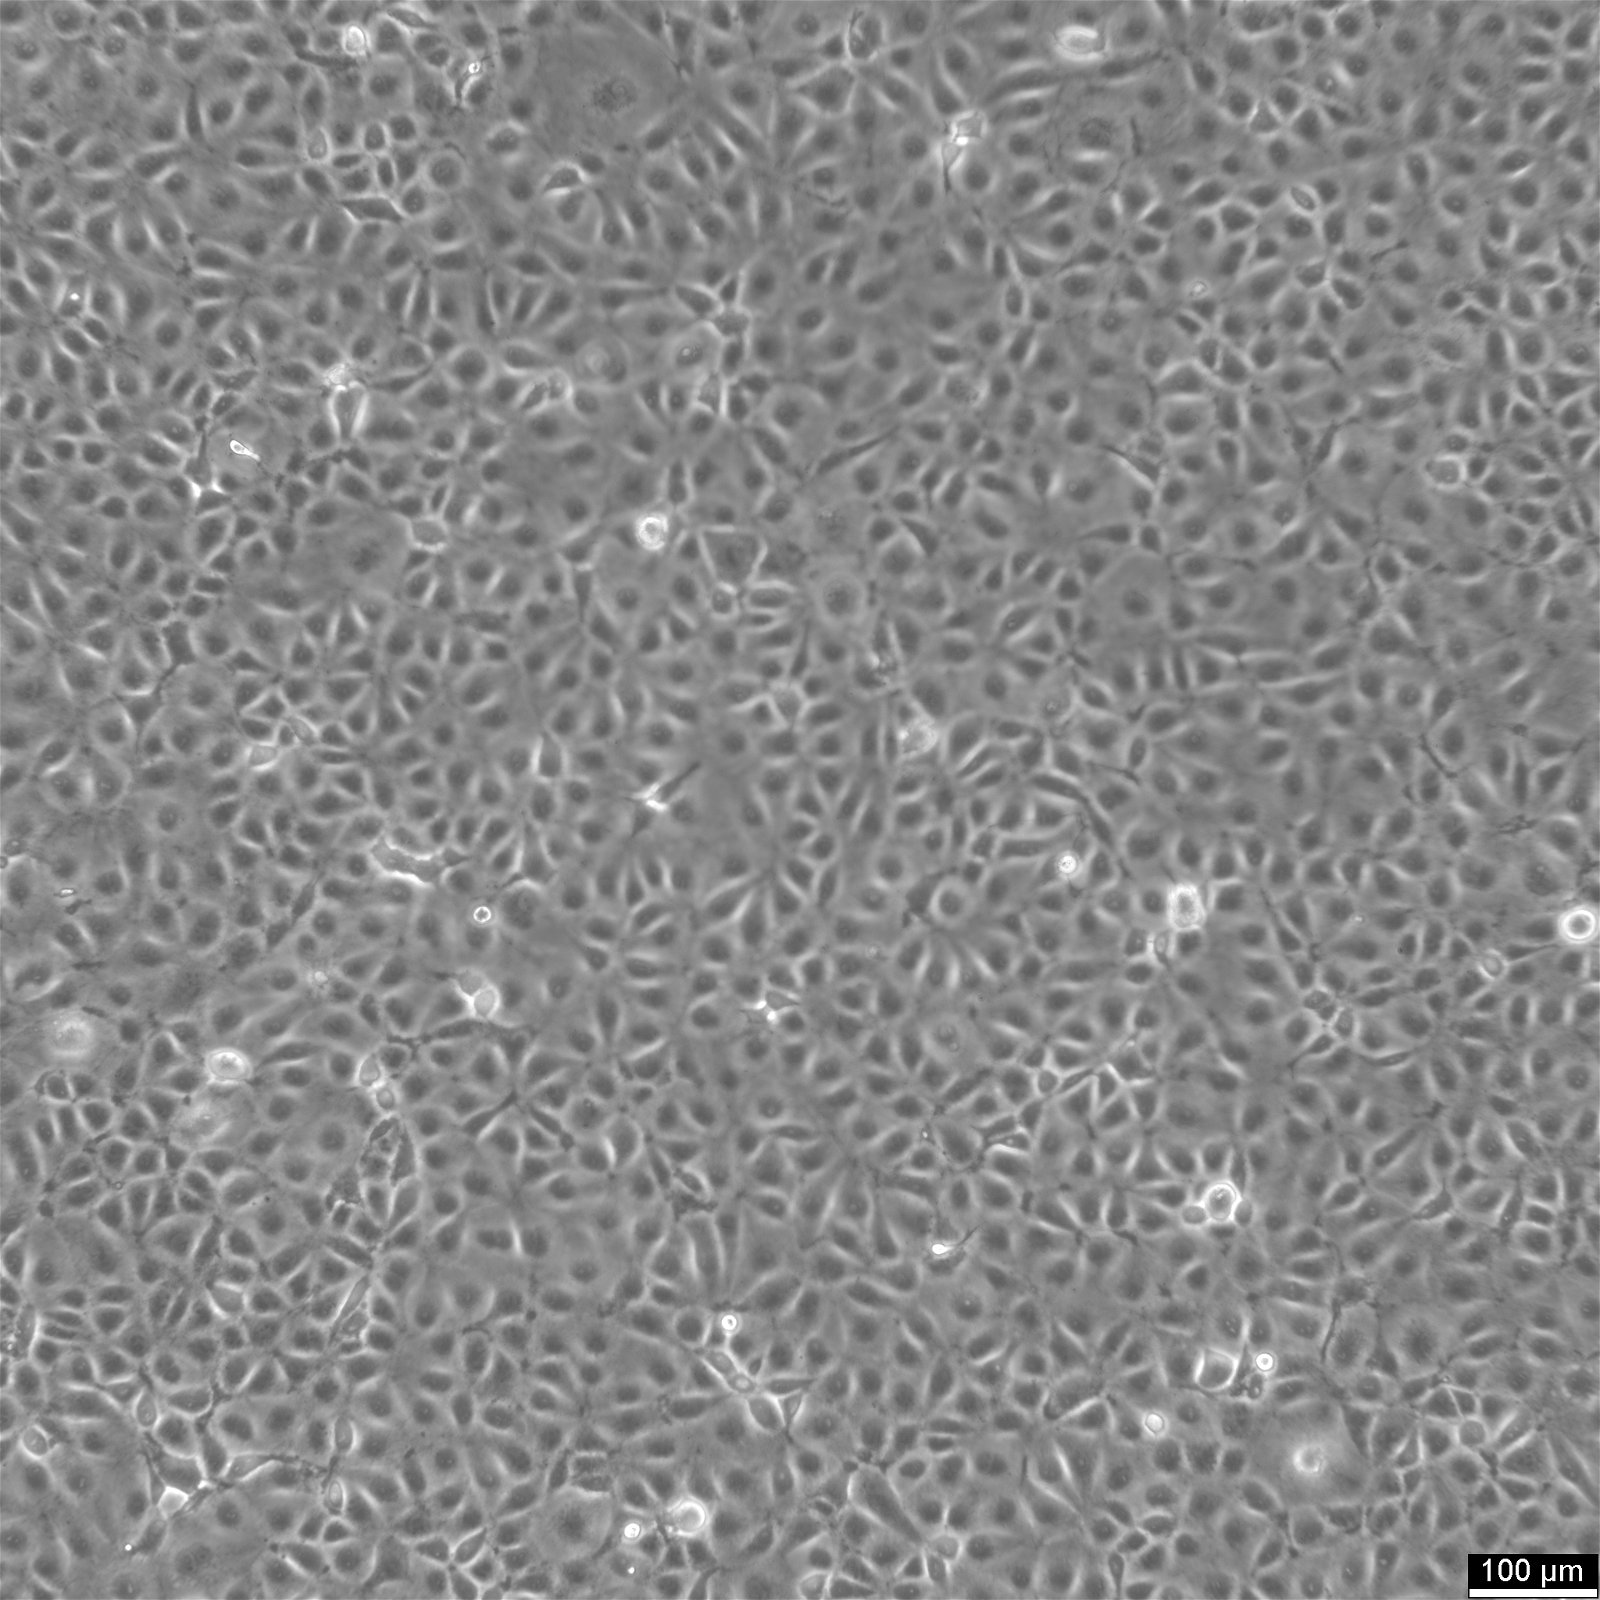 MARC-145 Cells